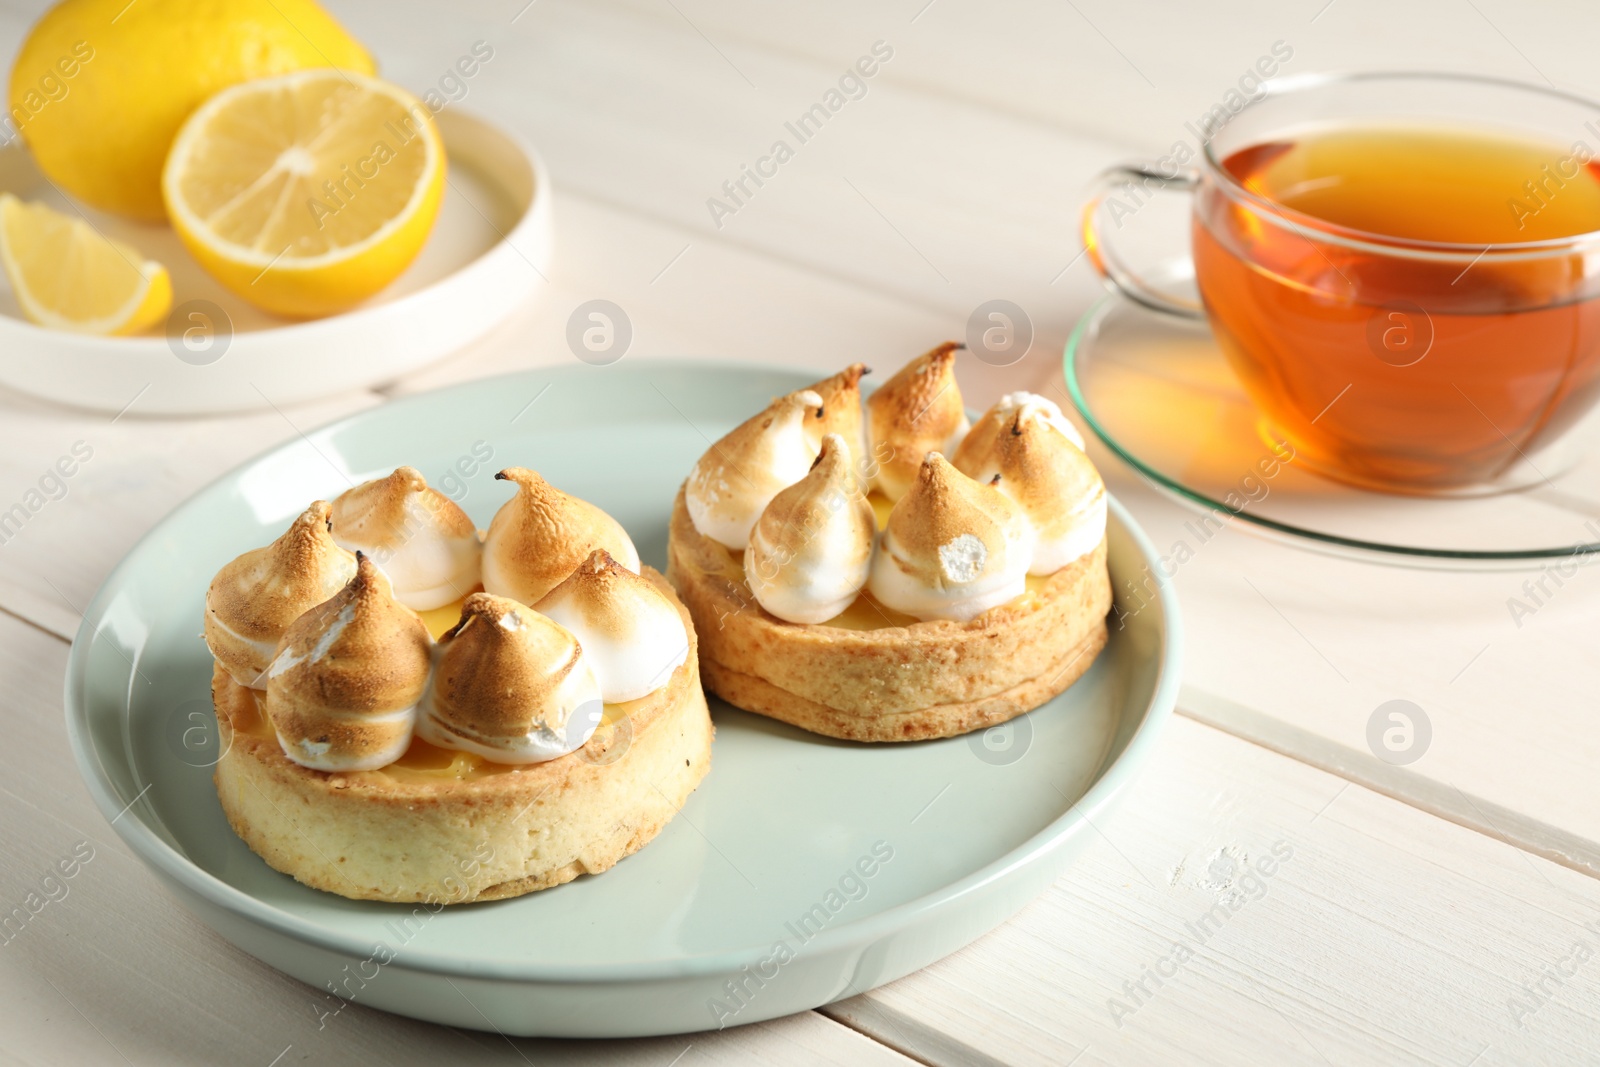 Photo of Delicious lemon meringue pies on white wooden table